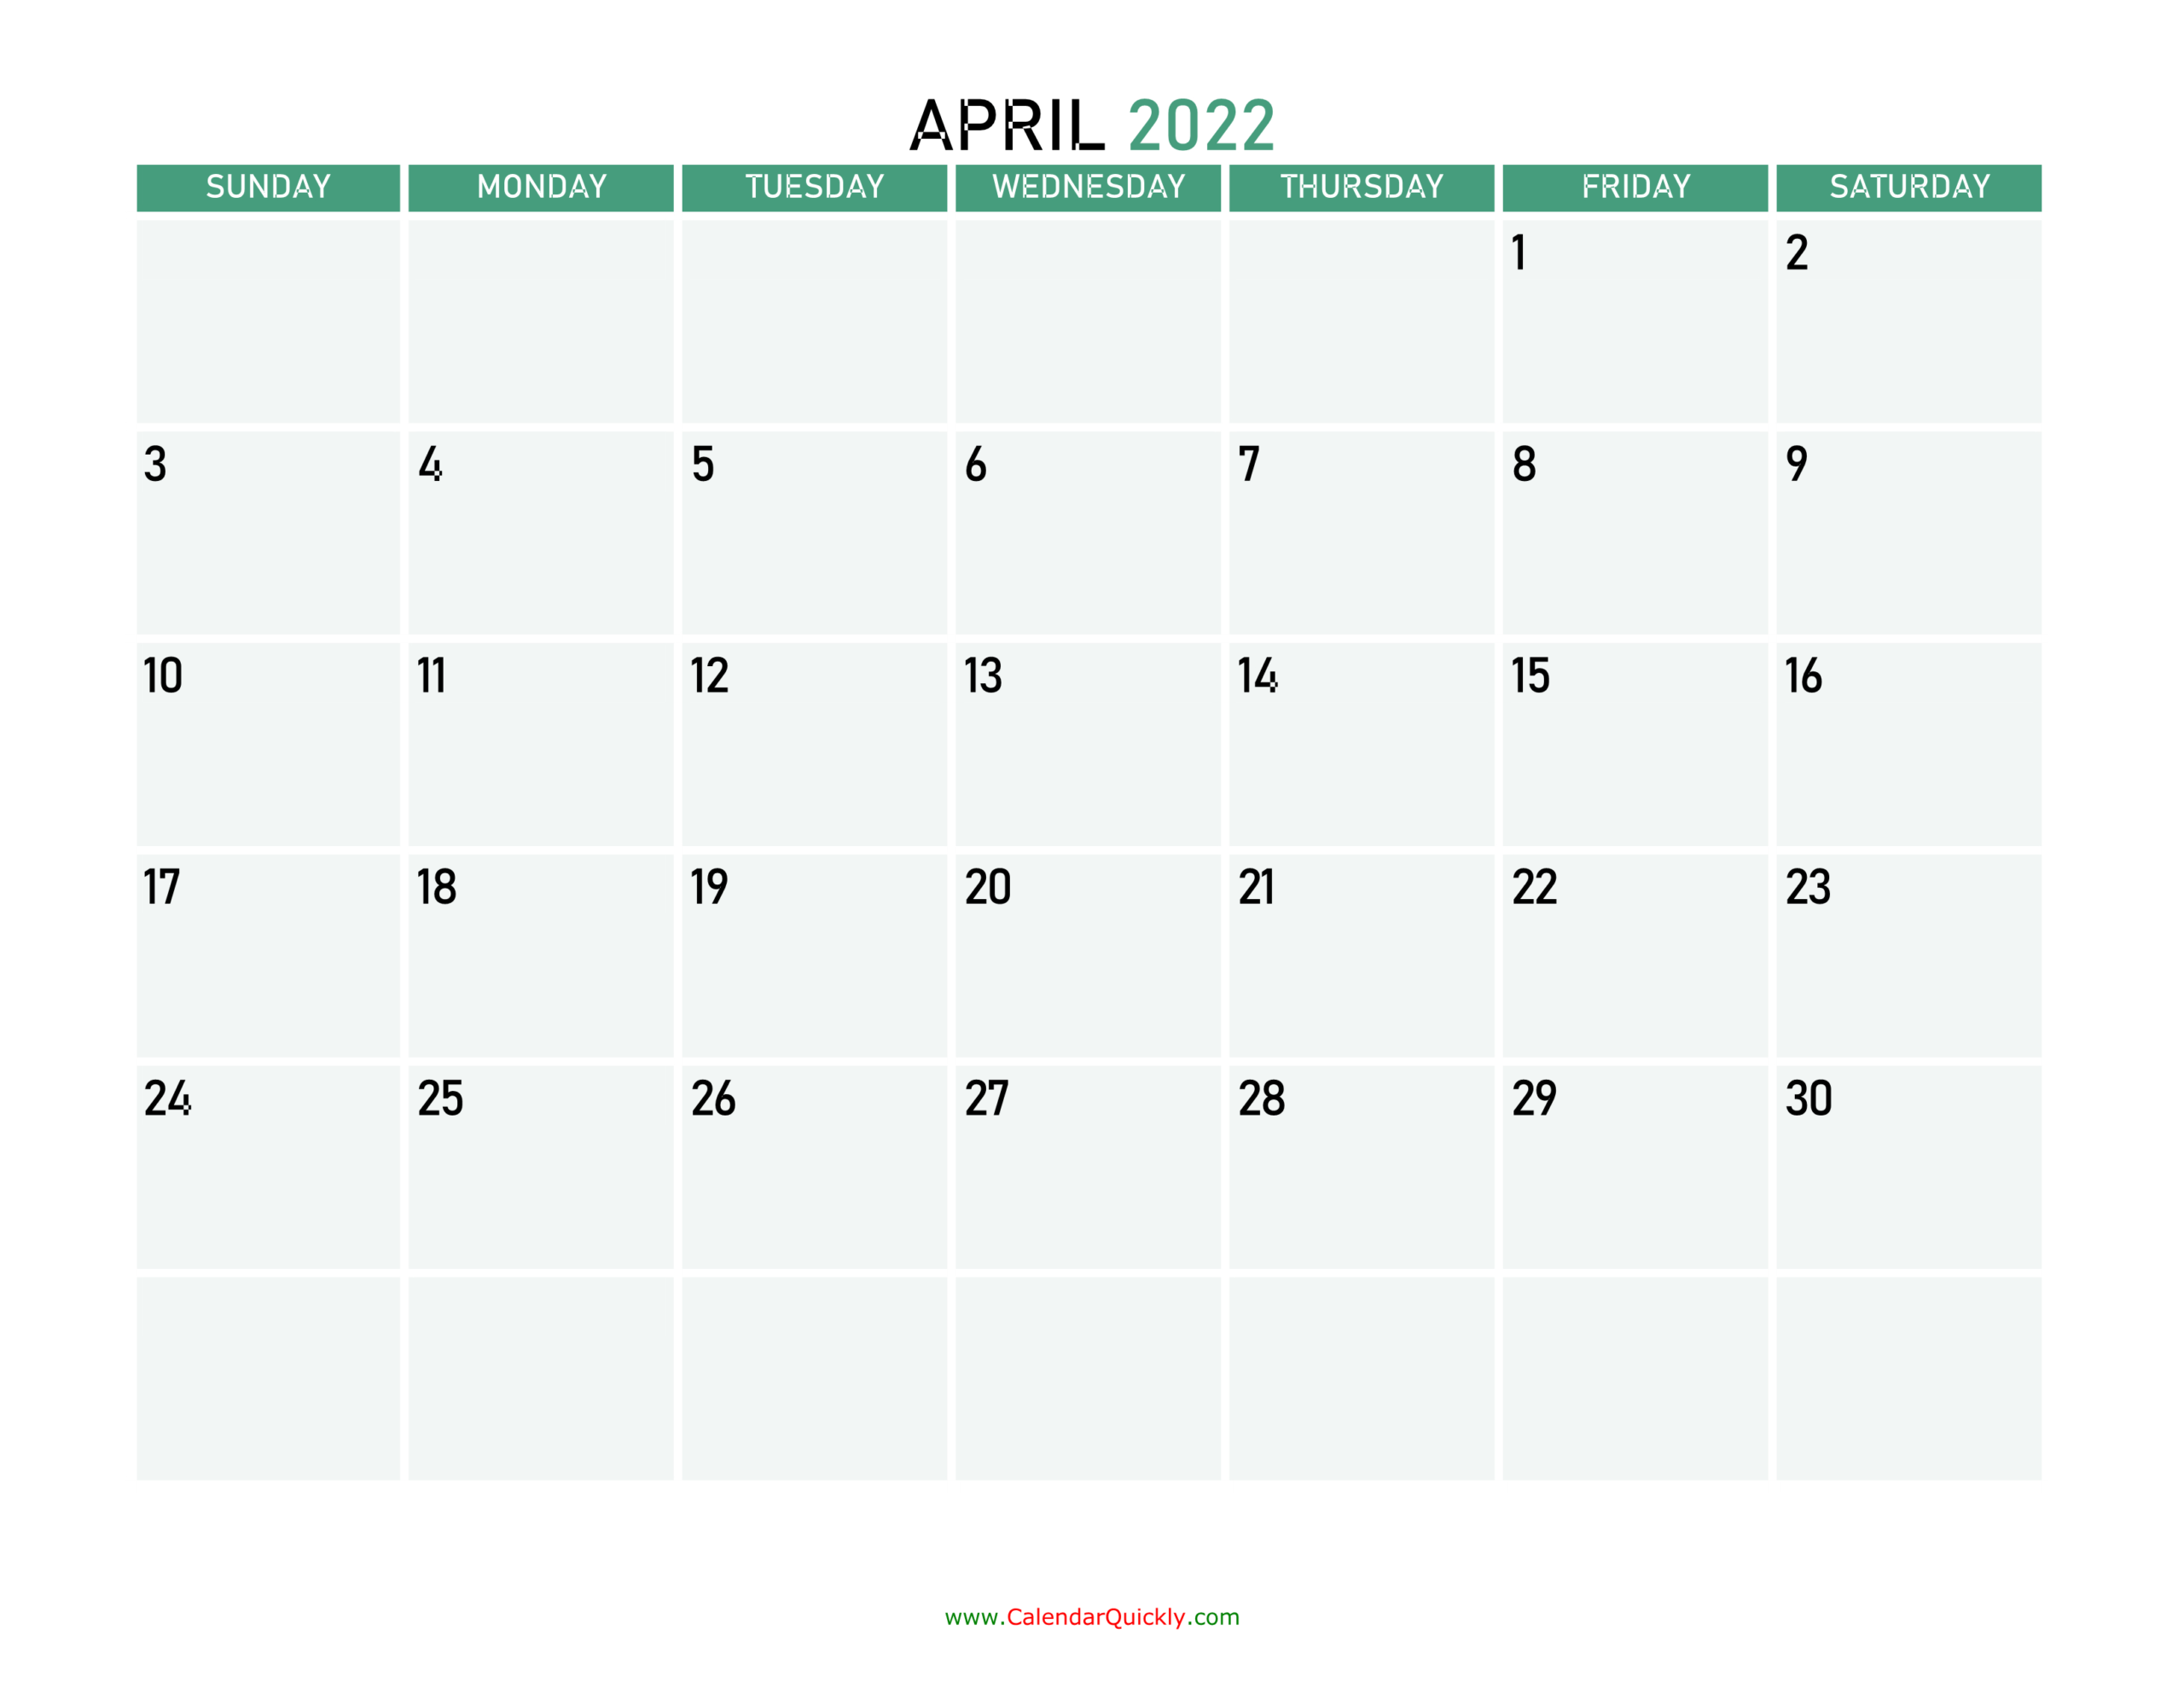 April 2022 Calendars | Calendar Quickly  Blank Calendar April 2022 To March 2022